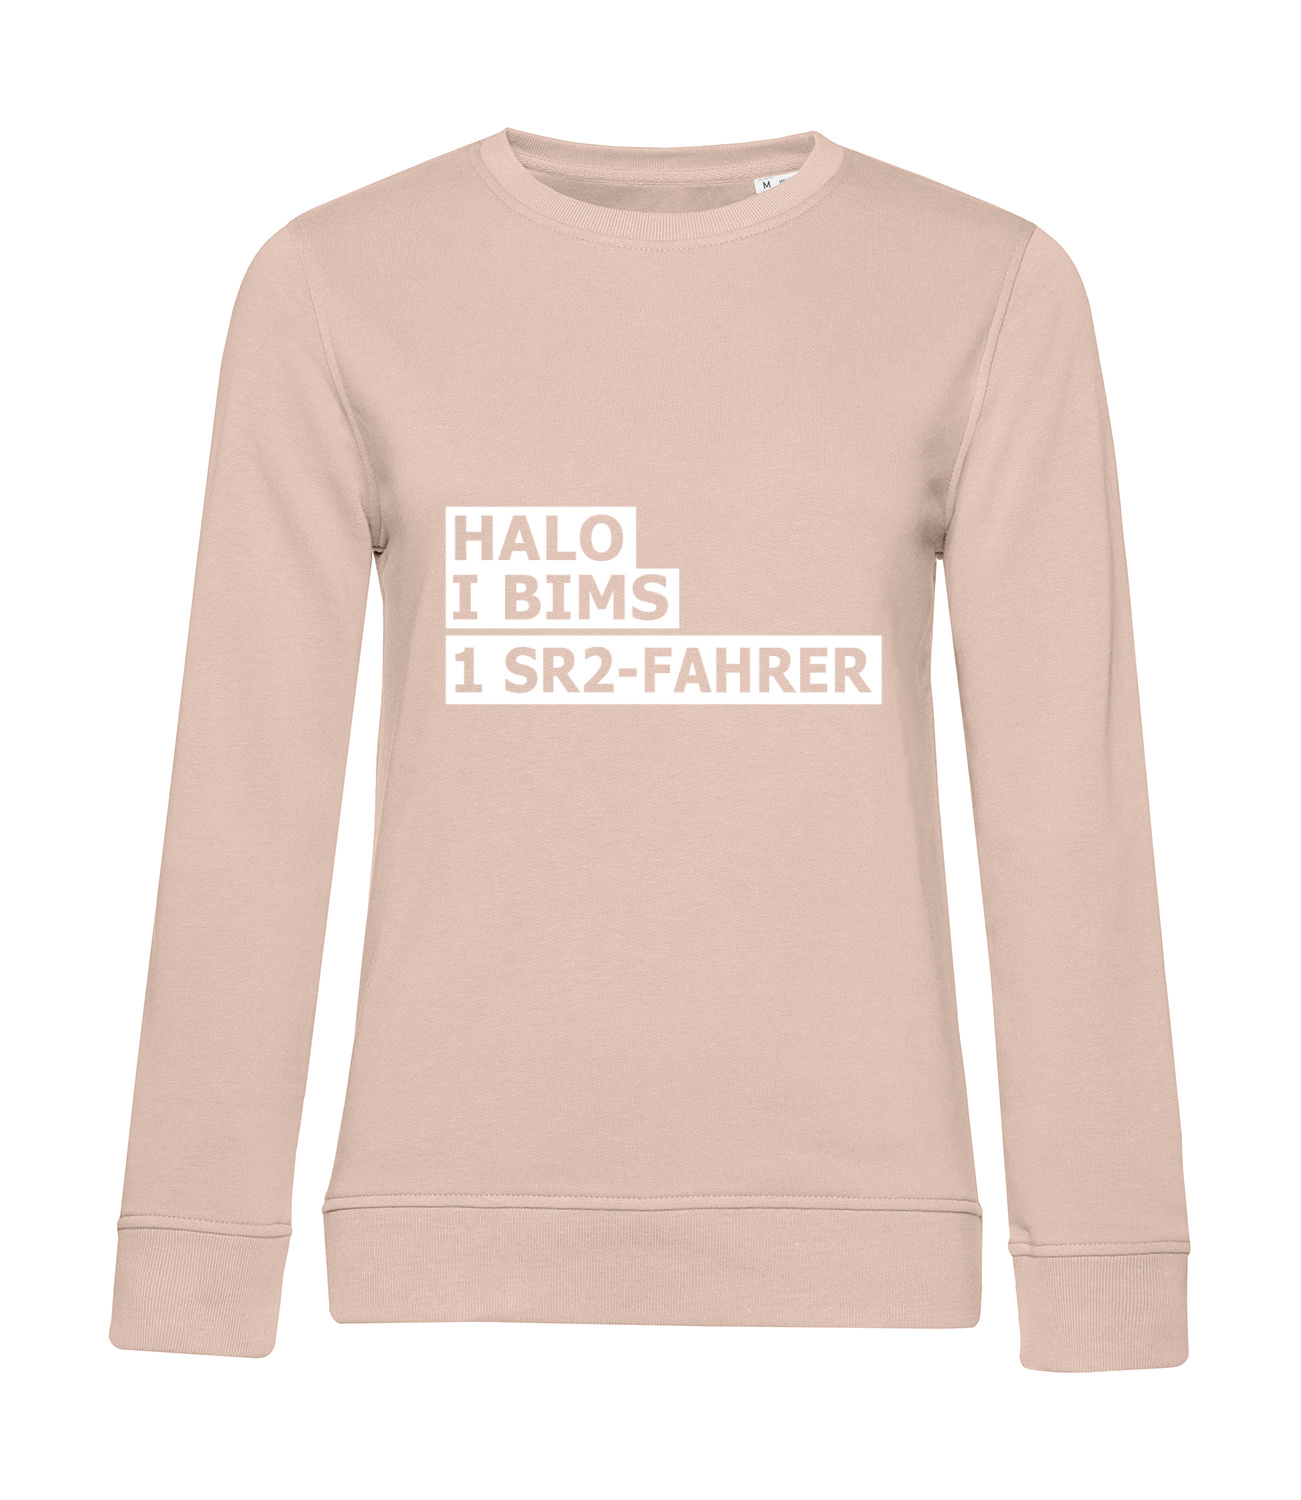 Nachhaltiges Sweatshirt Damen 2Takter - Halo I bims 1 SR2-Fahrer